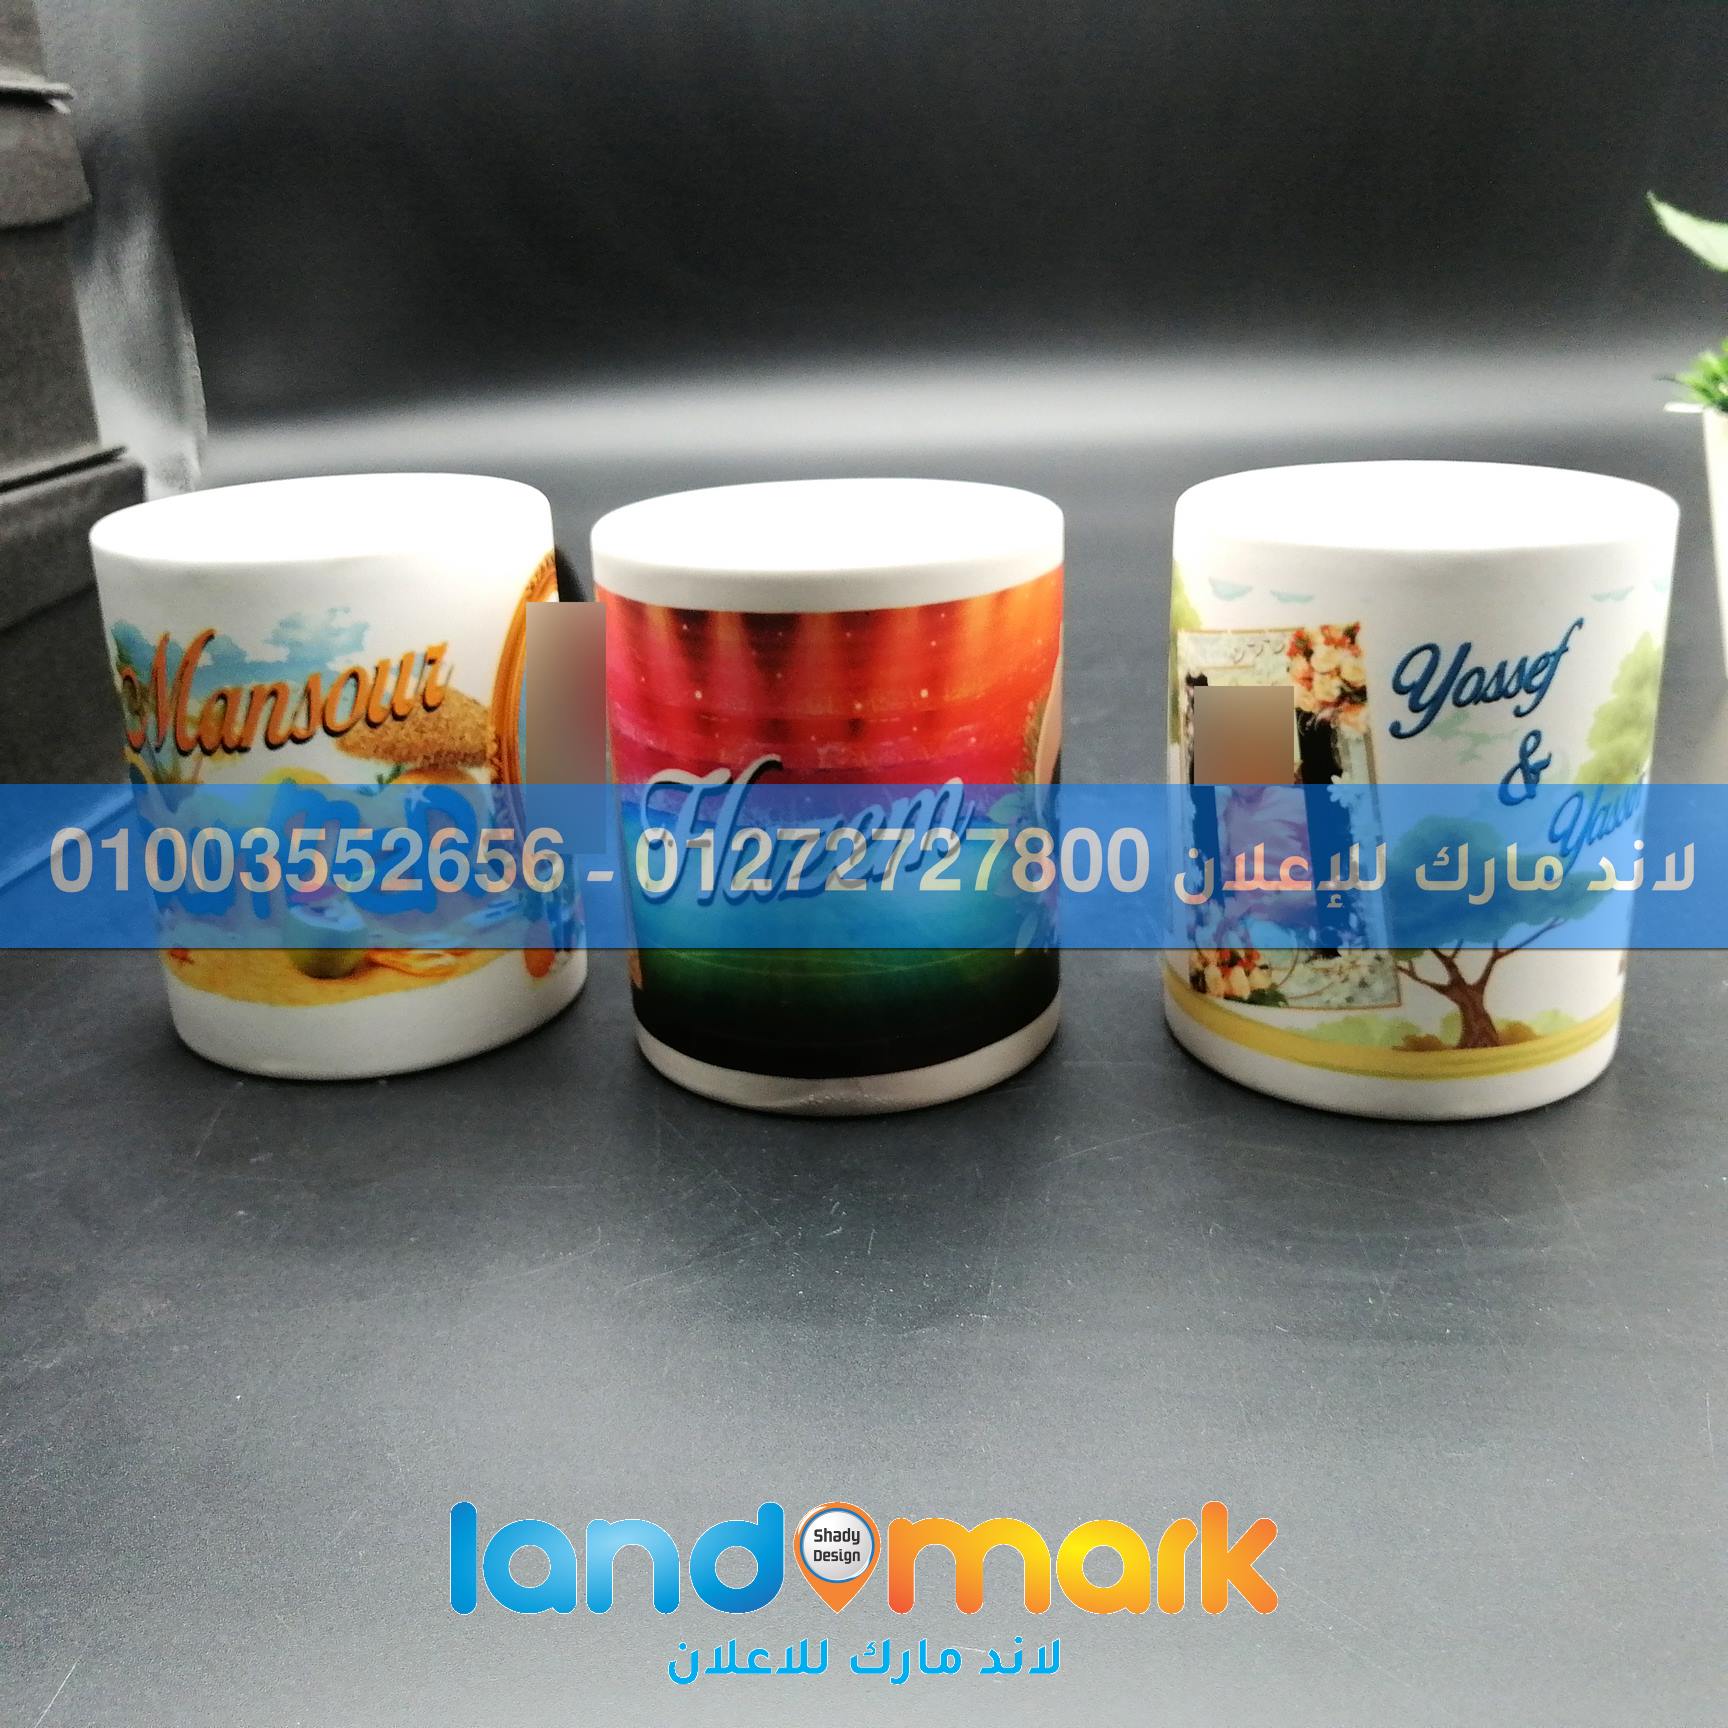 customized gifts egypt mug print 